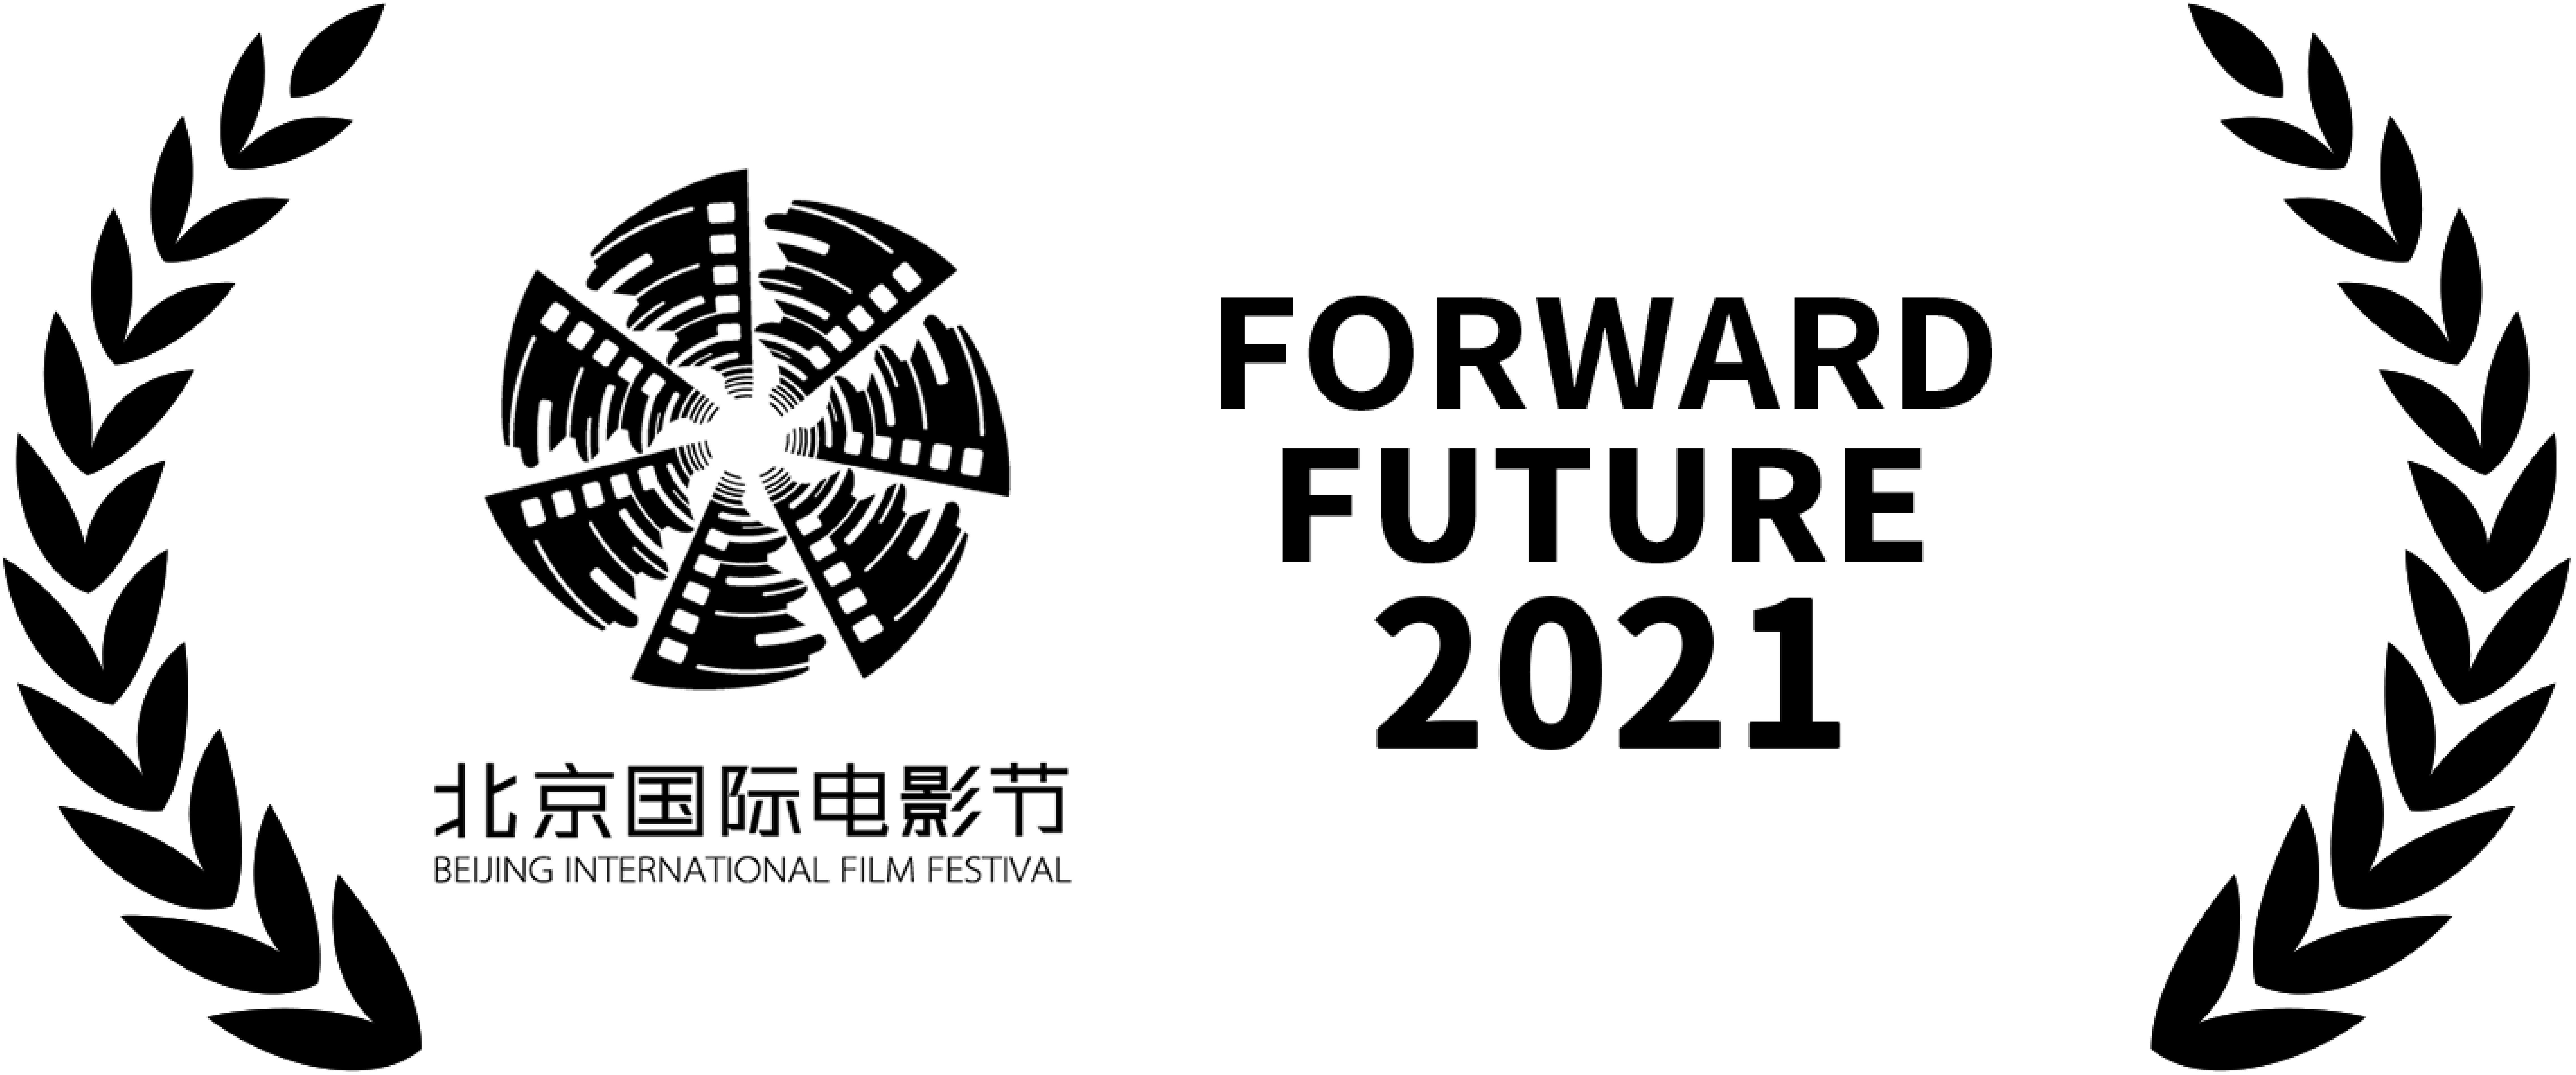 Beijing International Film Festival (Forward Future Competition)